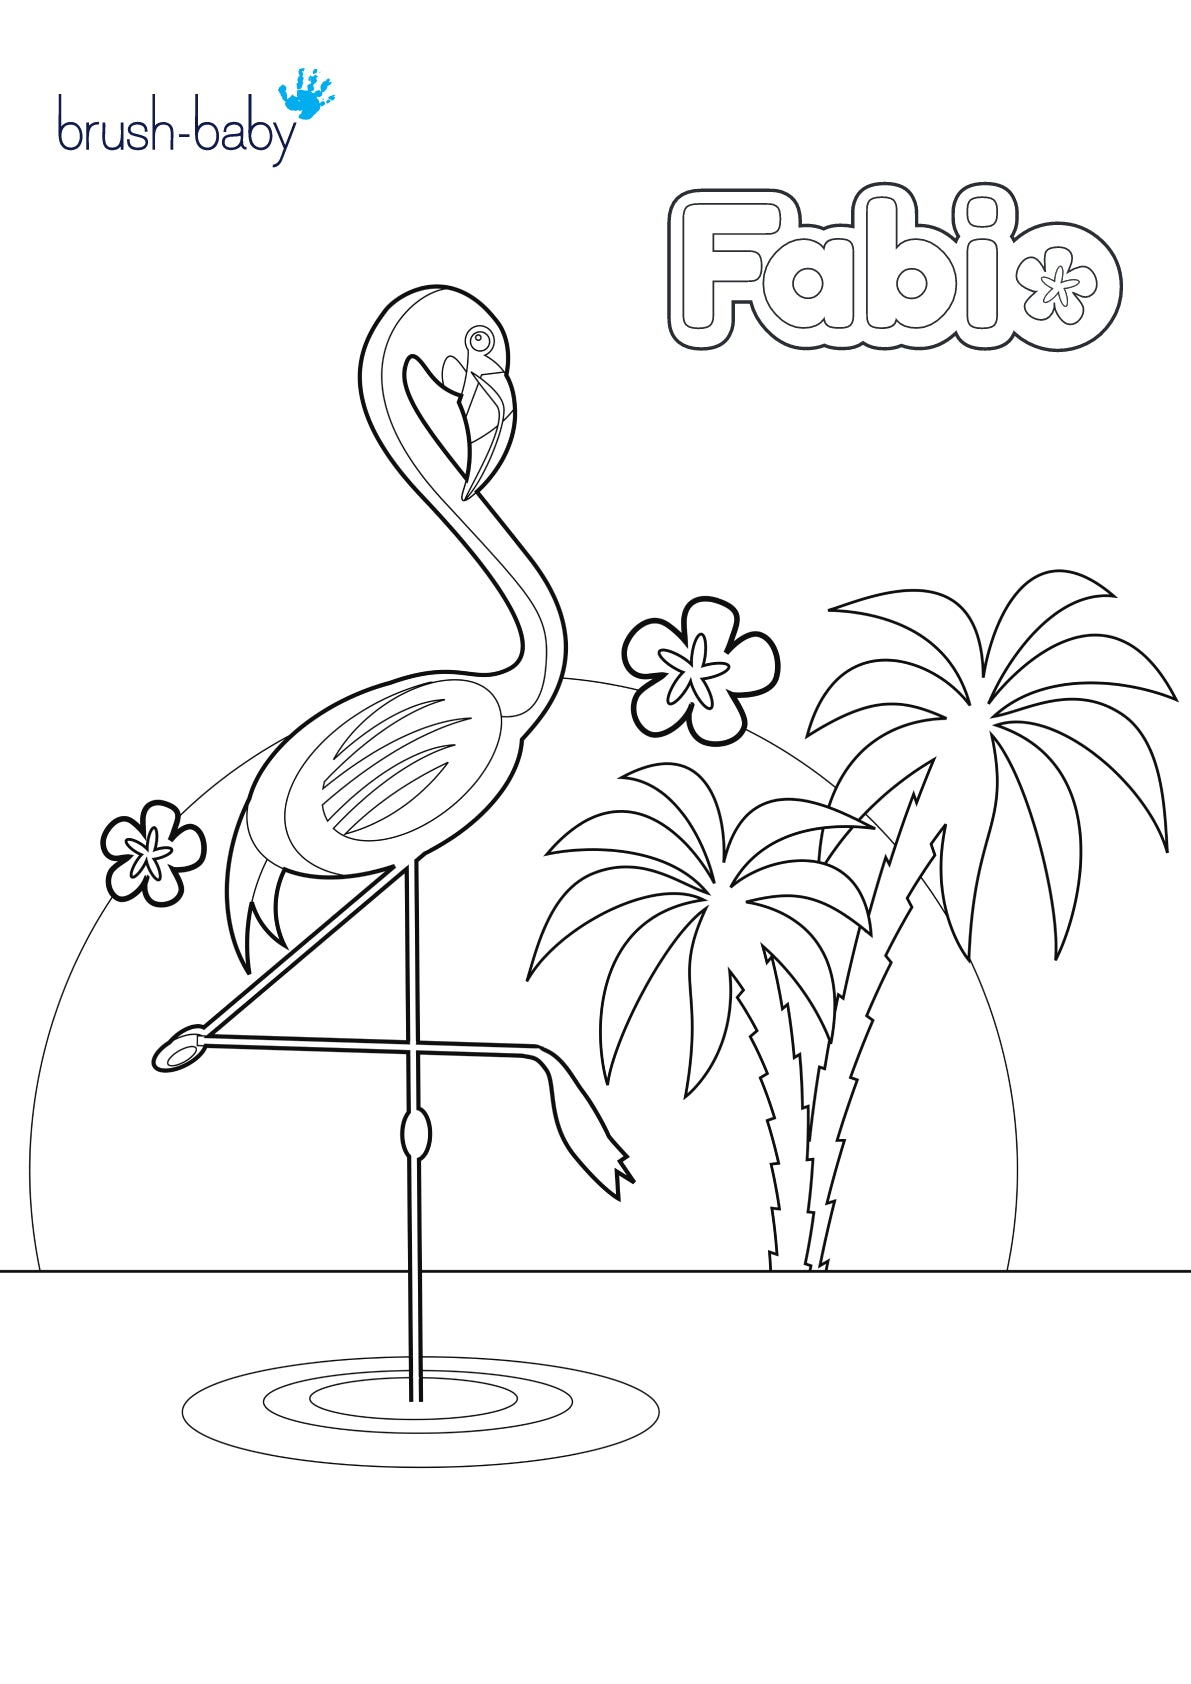 Brush-Baby Kids Sonic Electric Toothbrush Fabio The Flamingo Colouring Sheet